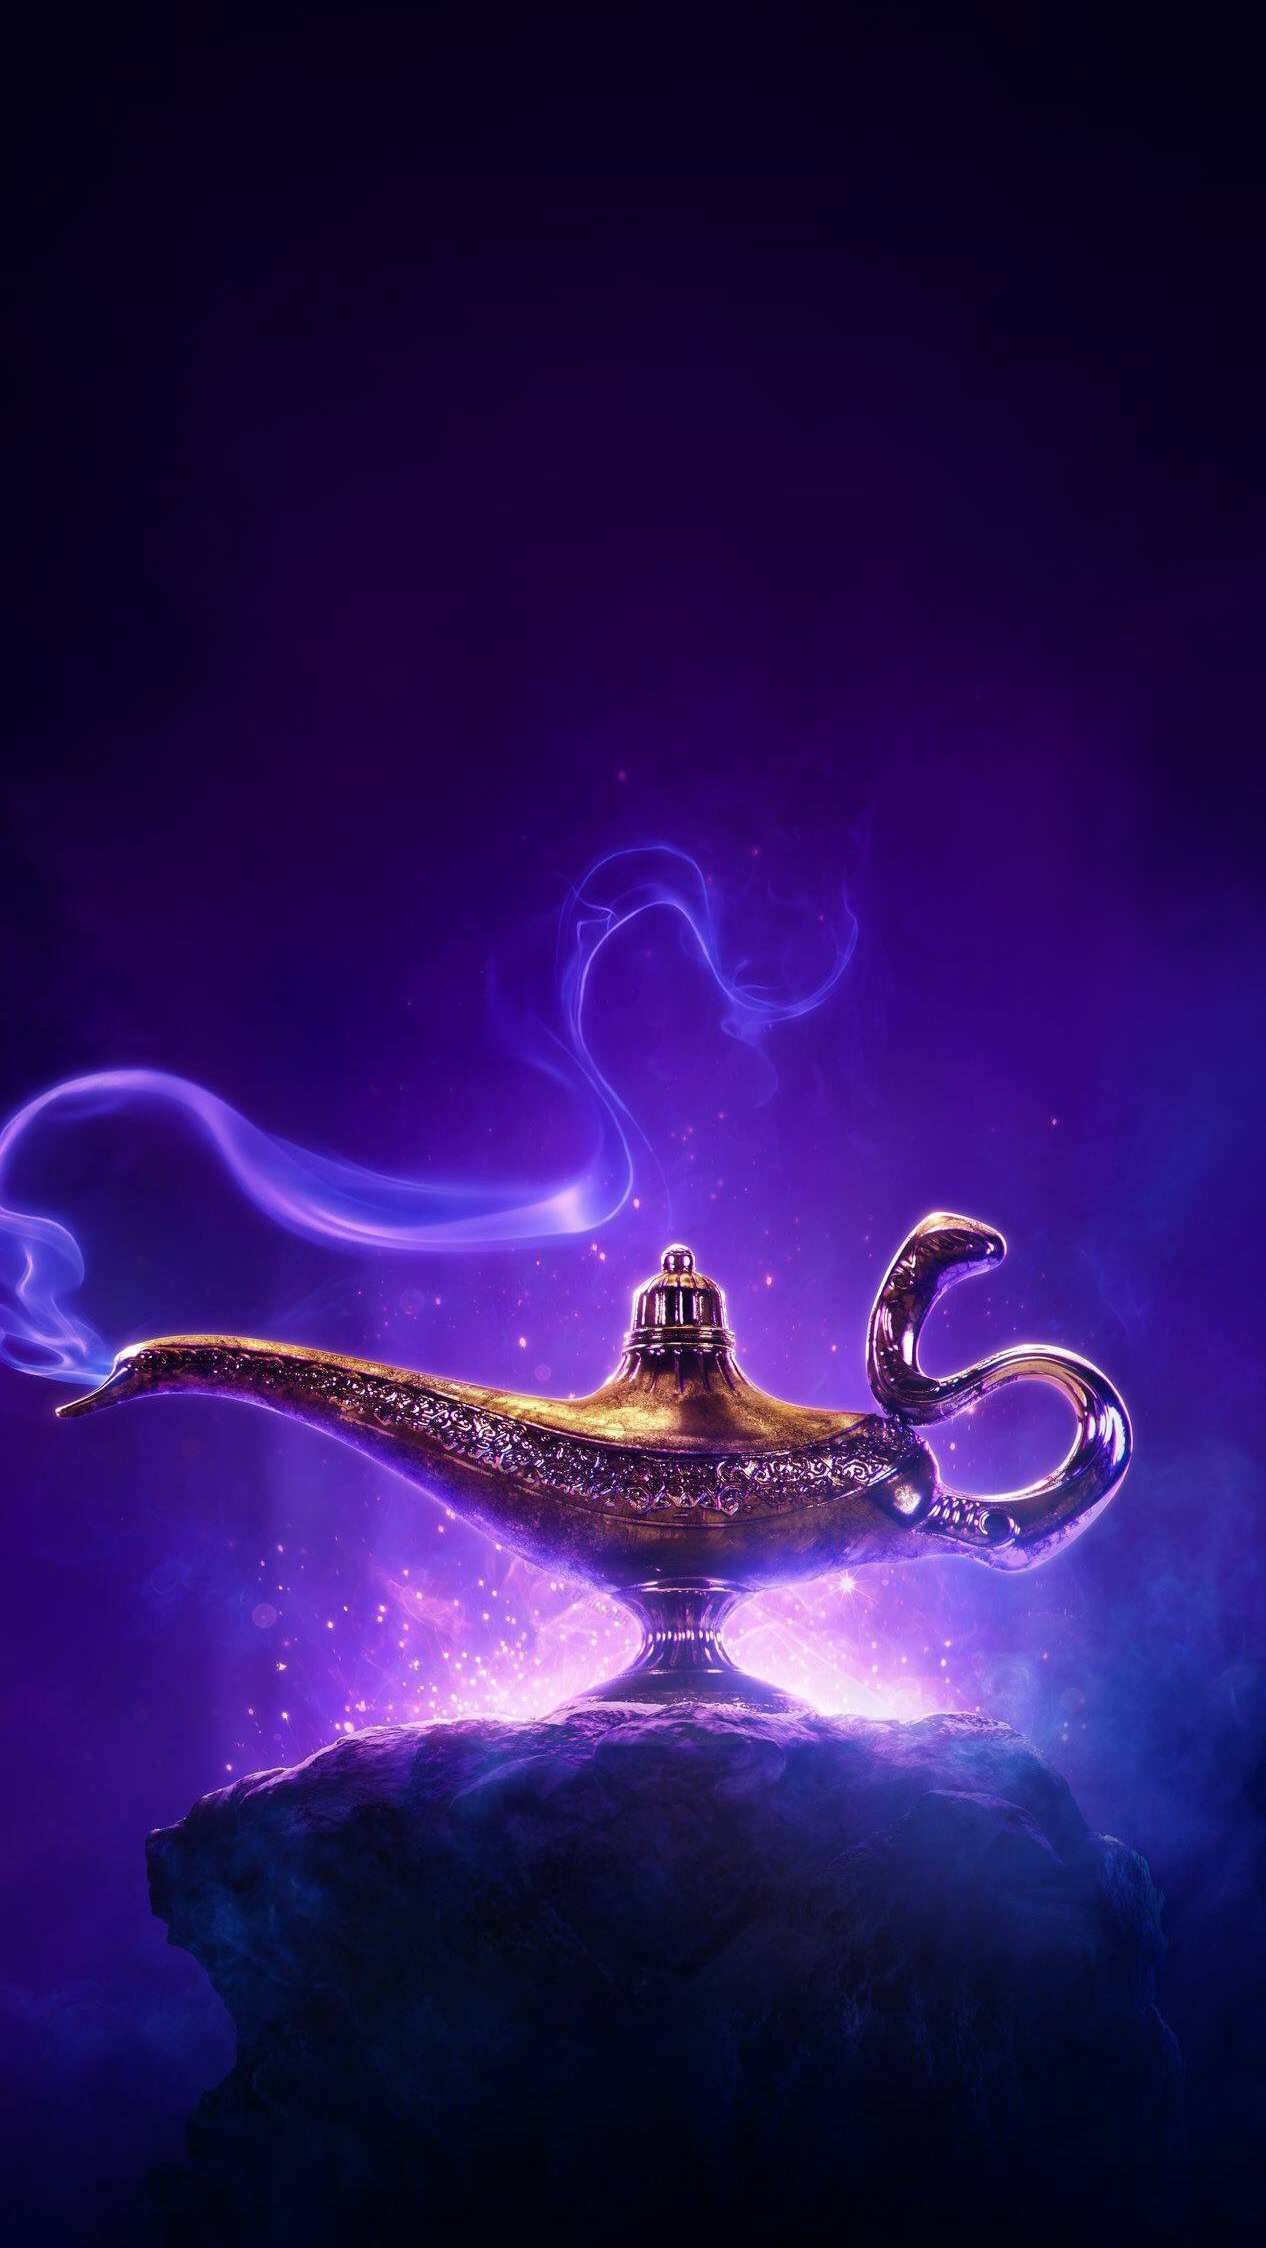 Aladdin iPhone Wallpaper. Aladdin full movie, Aladdin movie, Walt disney picture